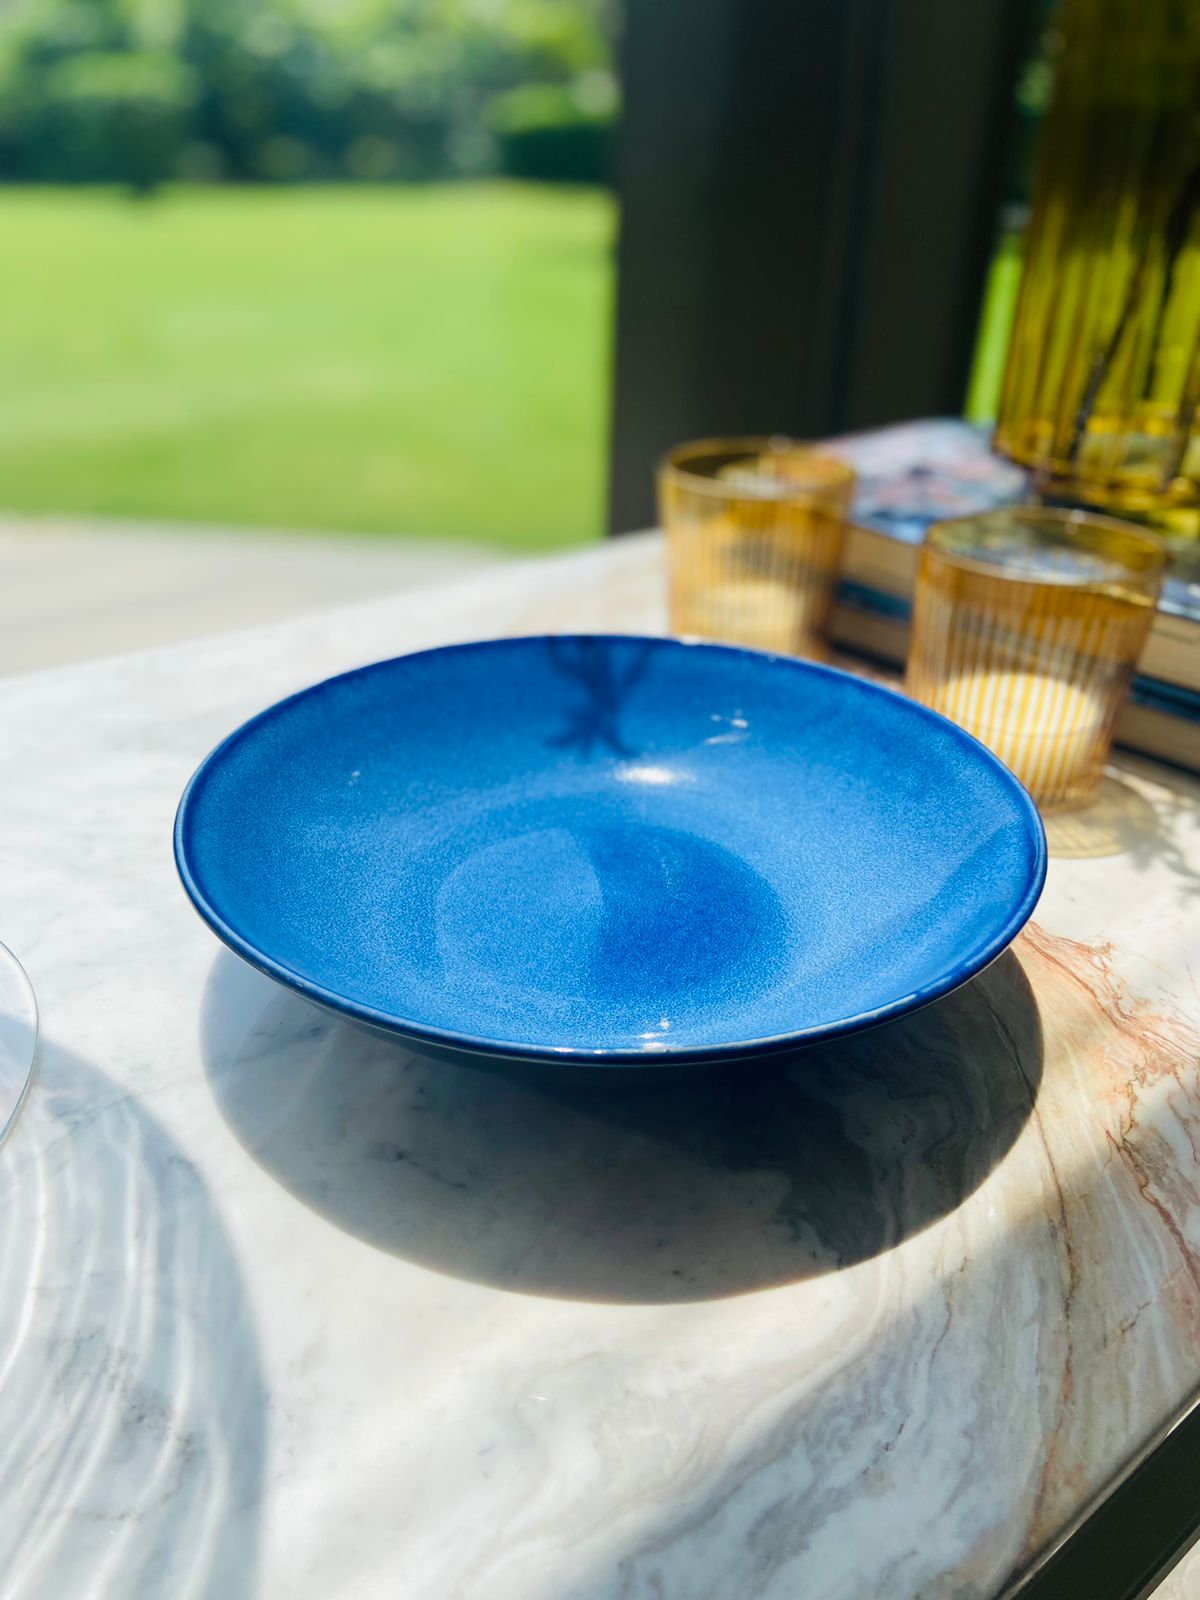 Snack Bowl Blue l Pottery Bowl l Salad Bowl l Ceramic Blue Bowl l Natural Bowl l